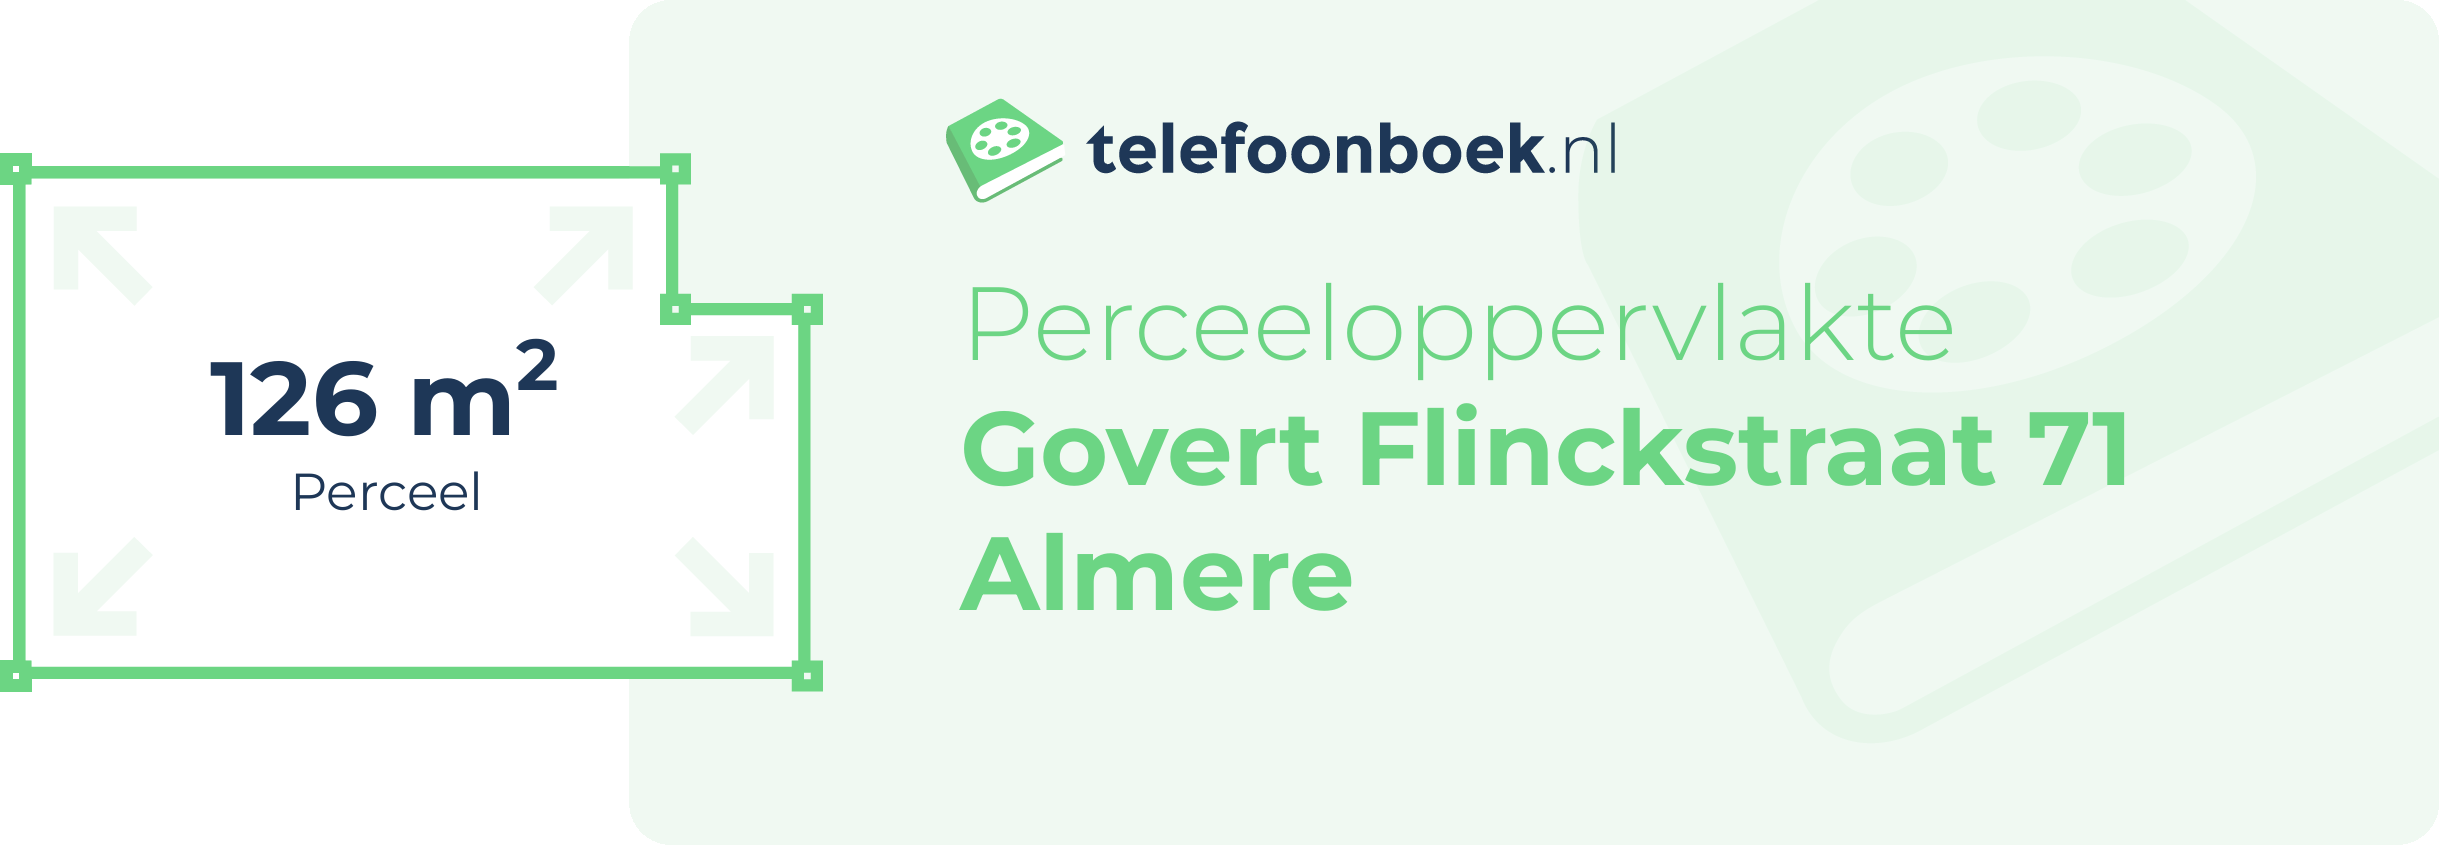 Perceeloppervlakte Govert Flinckstraat 71 Almere